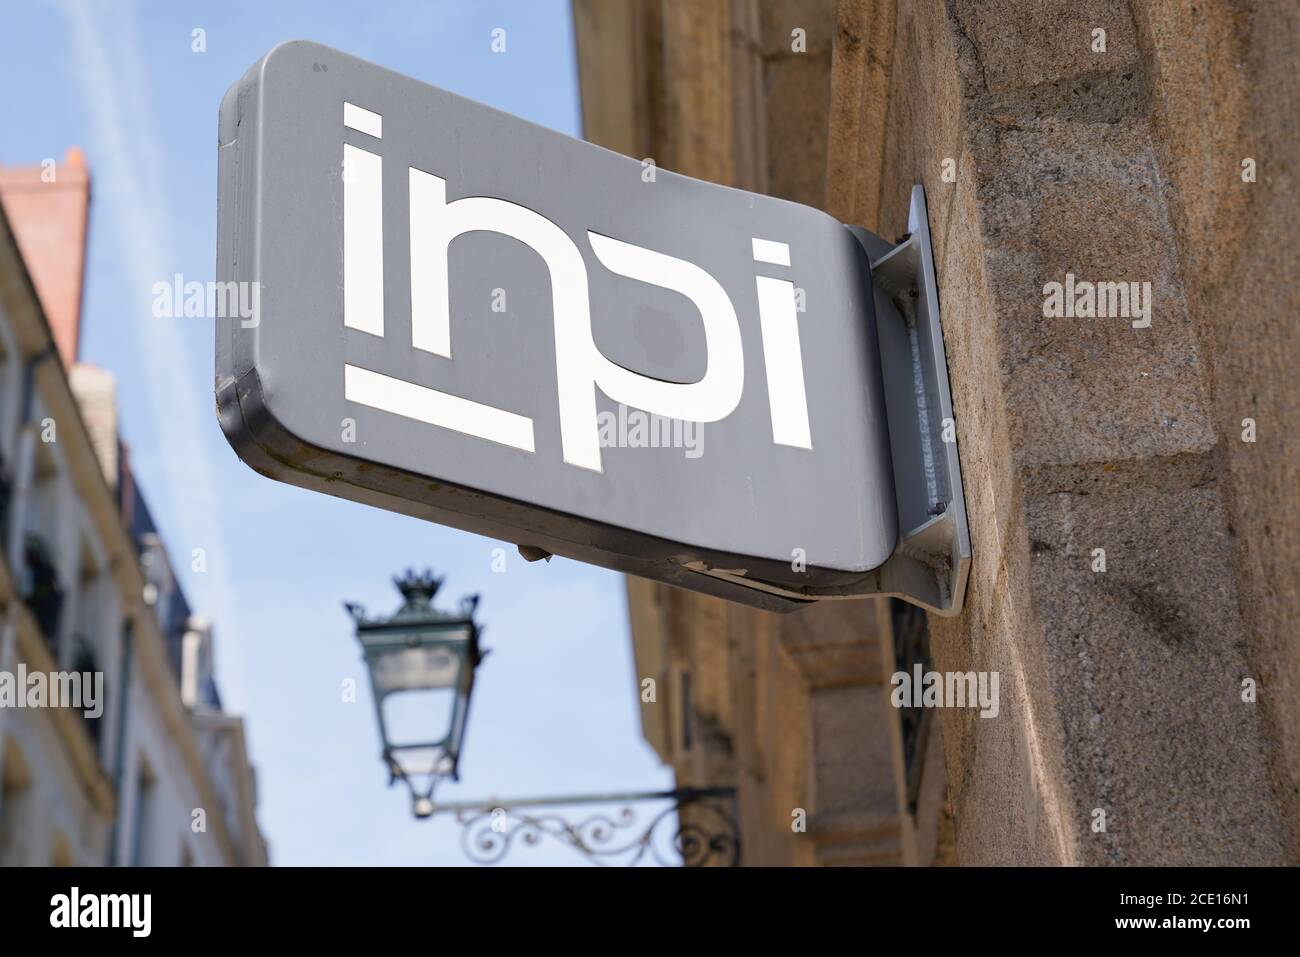 Bordeaux , Aquitaine / France - 08 25 2020 : inpi logo sign on wall building of Institut national de la propriété industrielle means in french Nationa Stock Photo